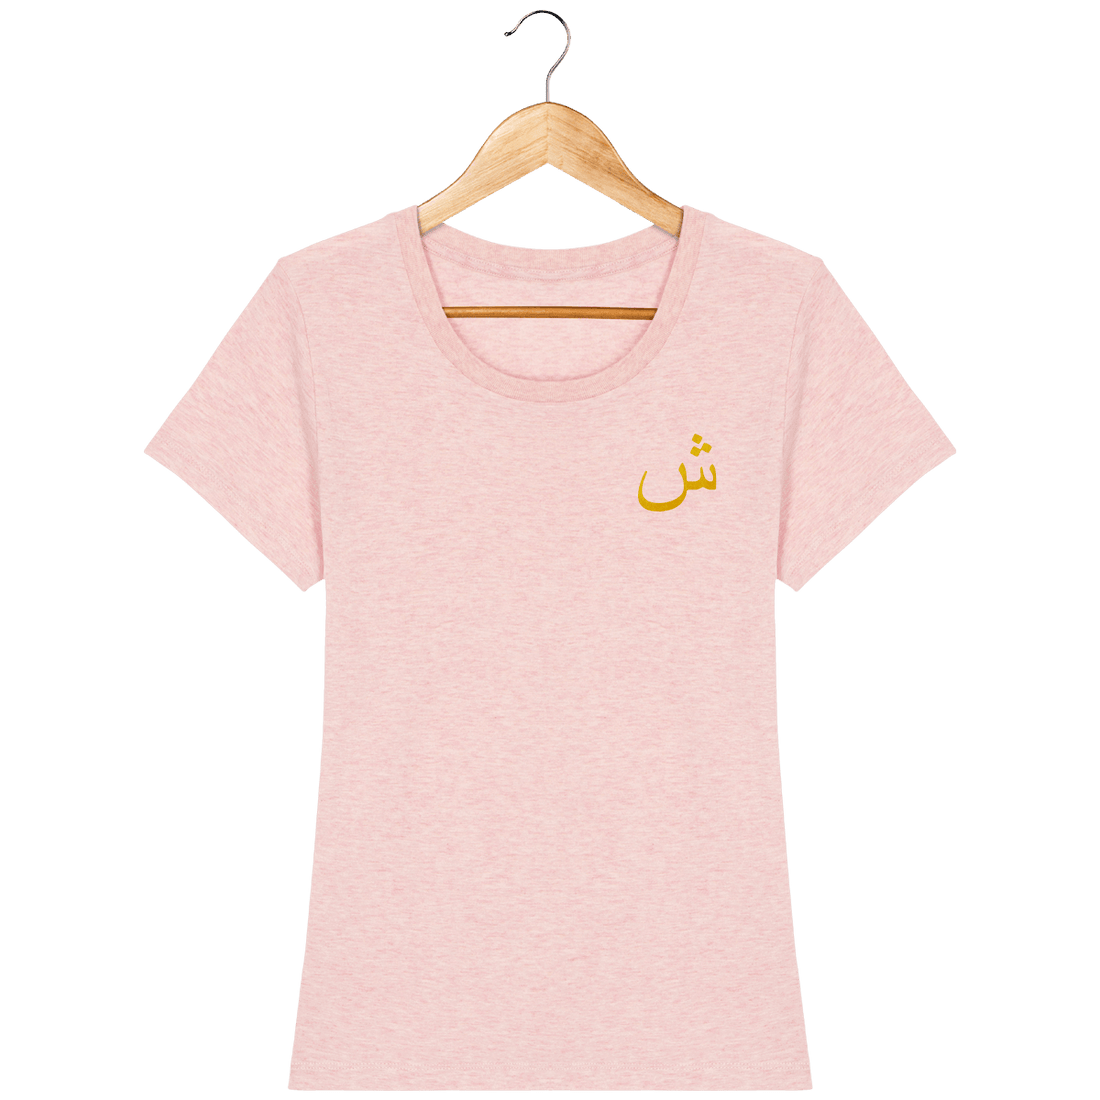 Femme>Tee-shirts - T-Shirt Femme <br> Lettre Arabe Shiin